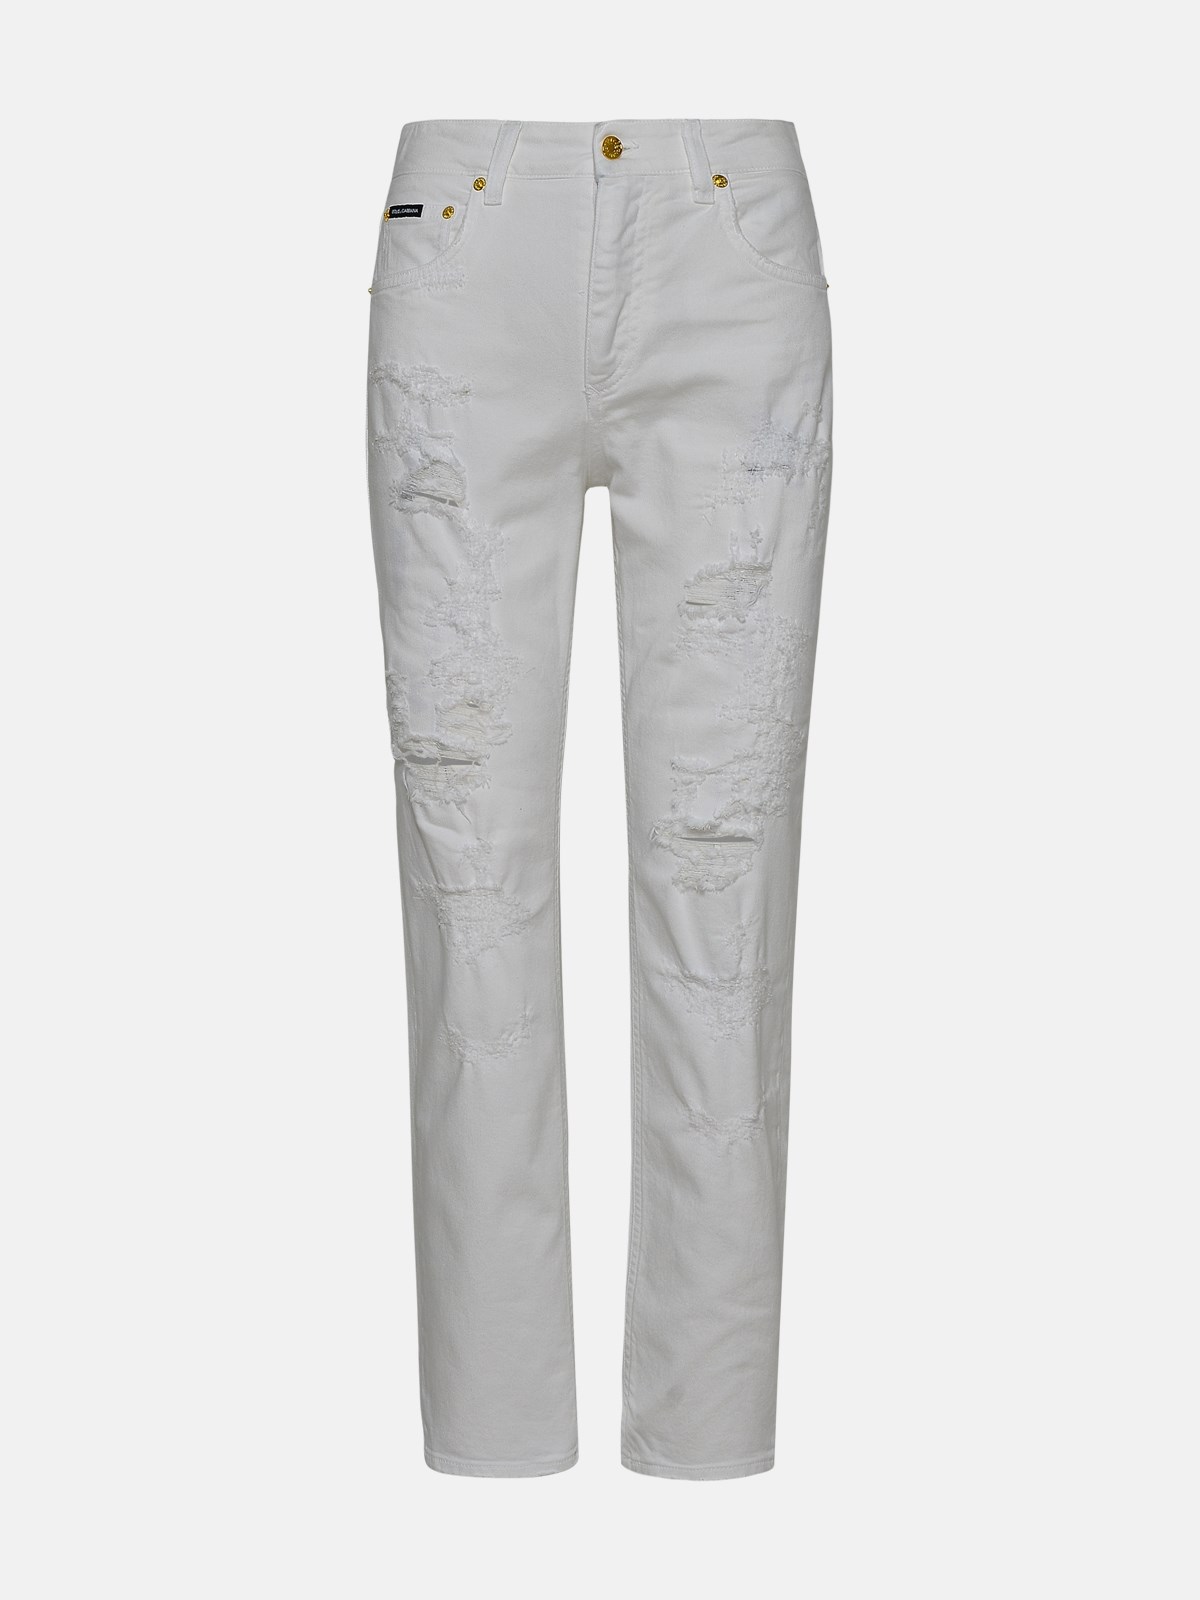 Dolce & Gabbana White Cotton Denim Jeans